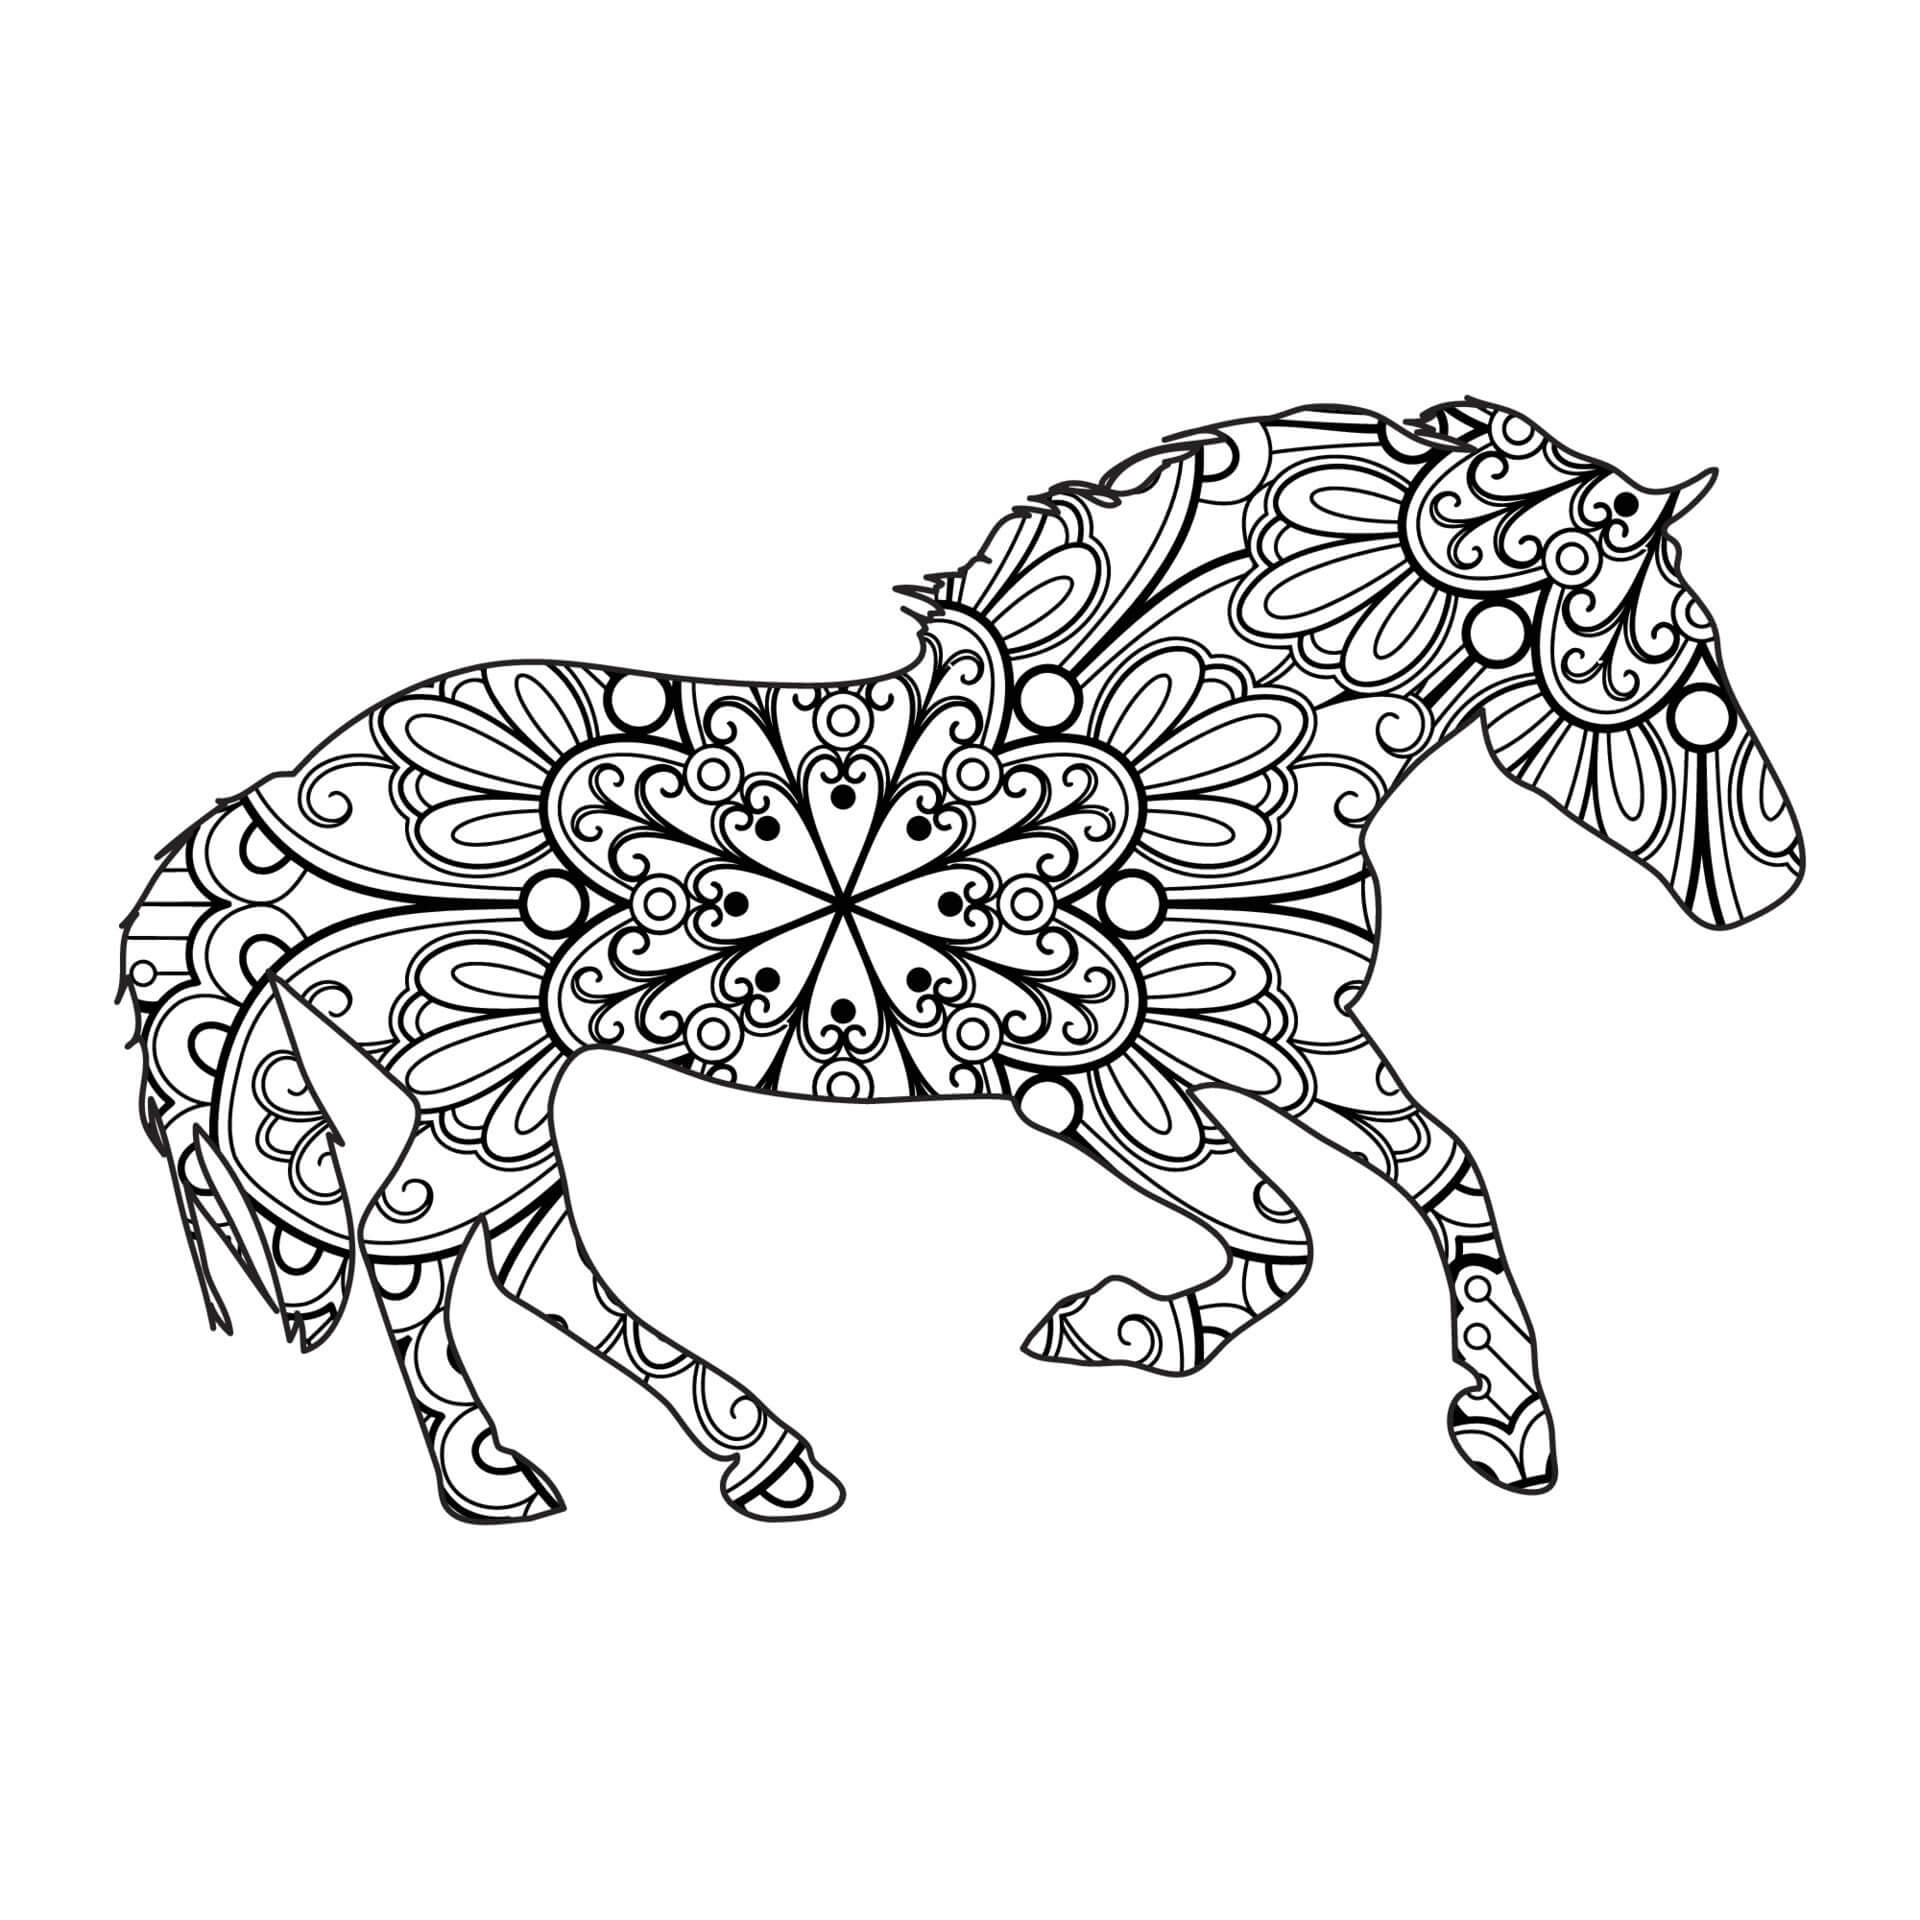 Horse Walking Mandala coloring page - Download, Print or Color Online ...